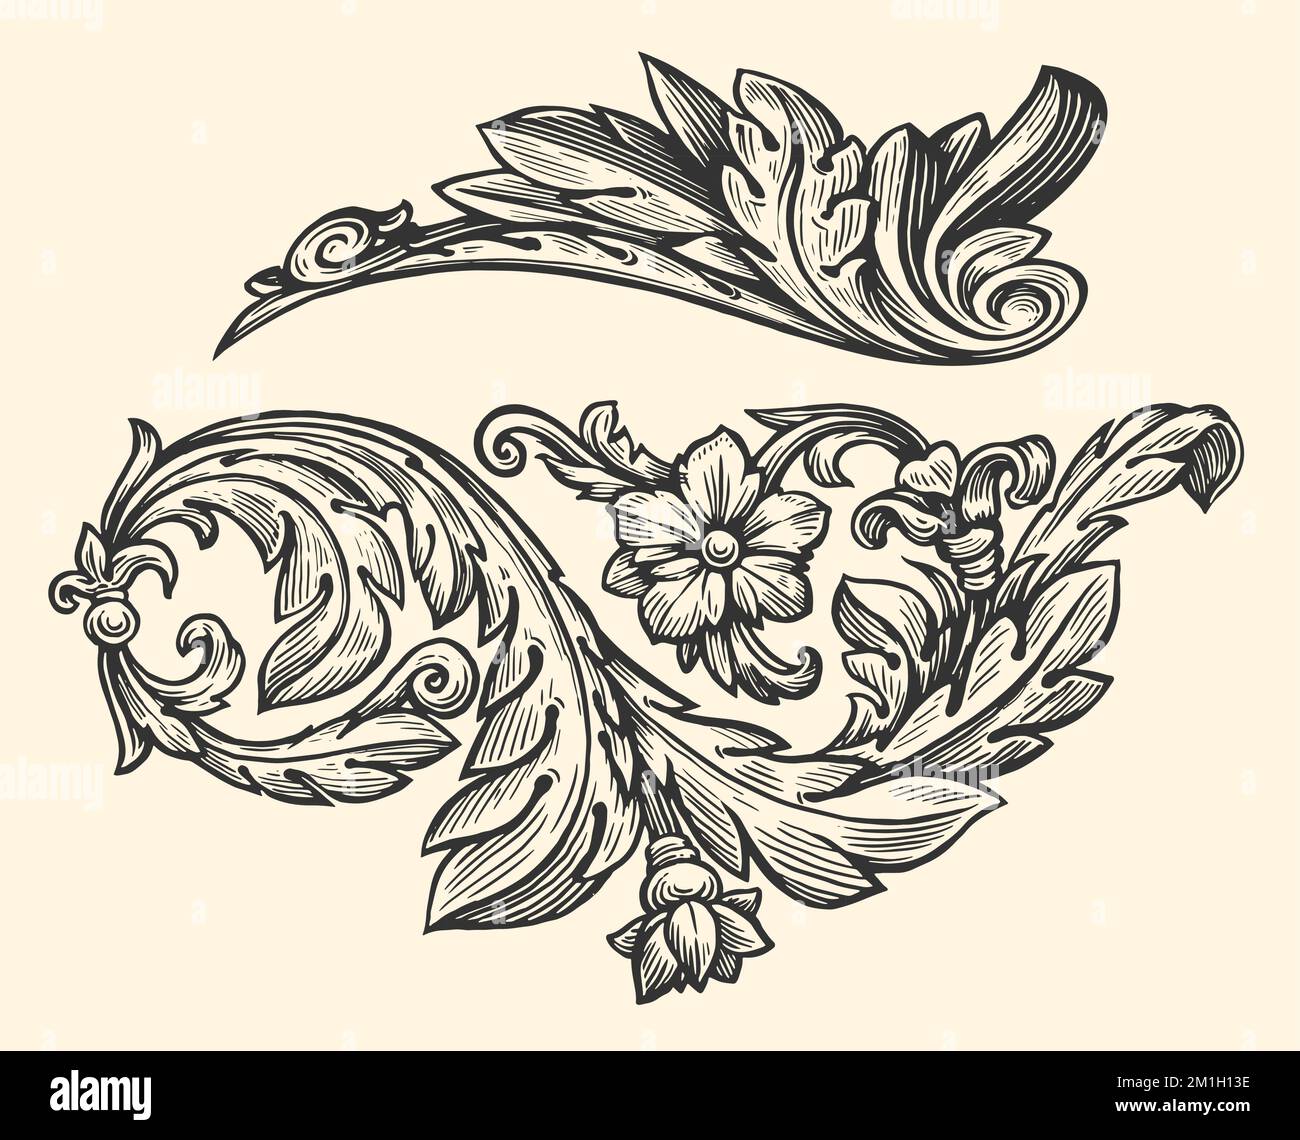 Ornate swirling floral motif. Decorative floral design elements. Pattern vector illustration in vintage engraving style Stock Vector